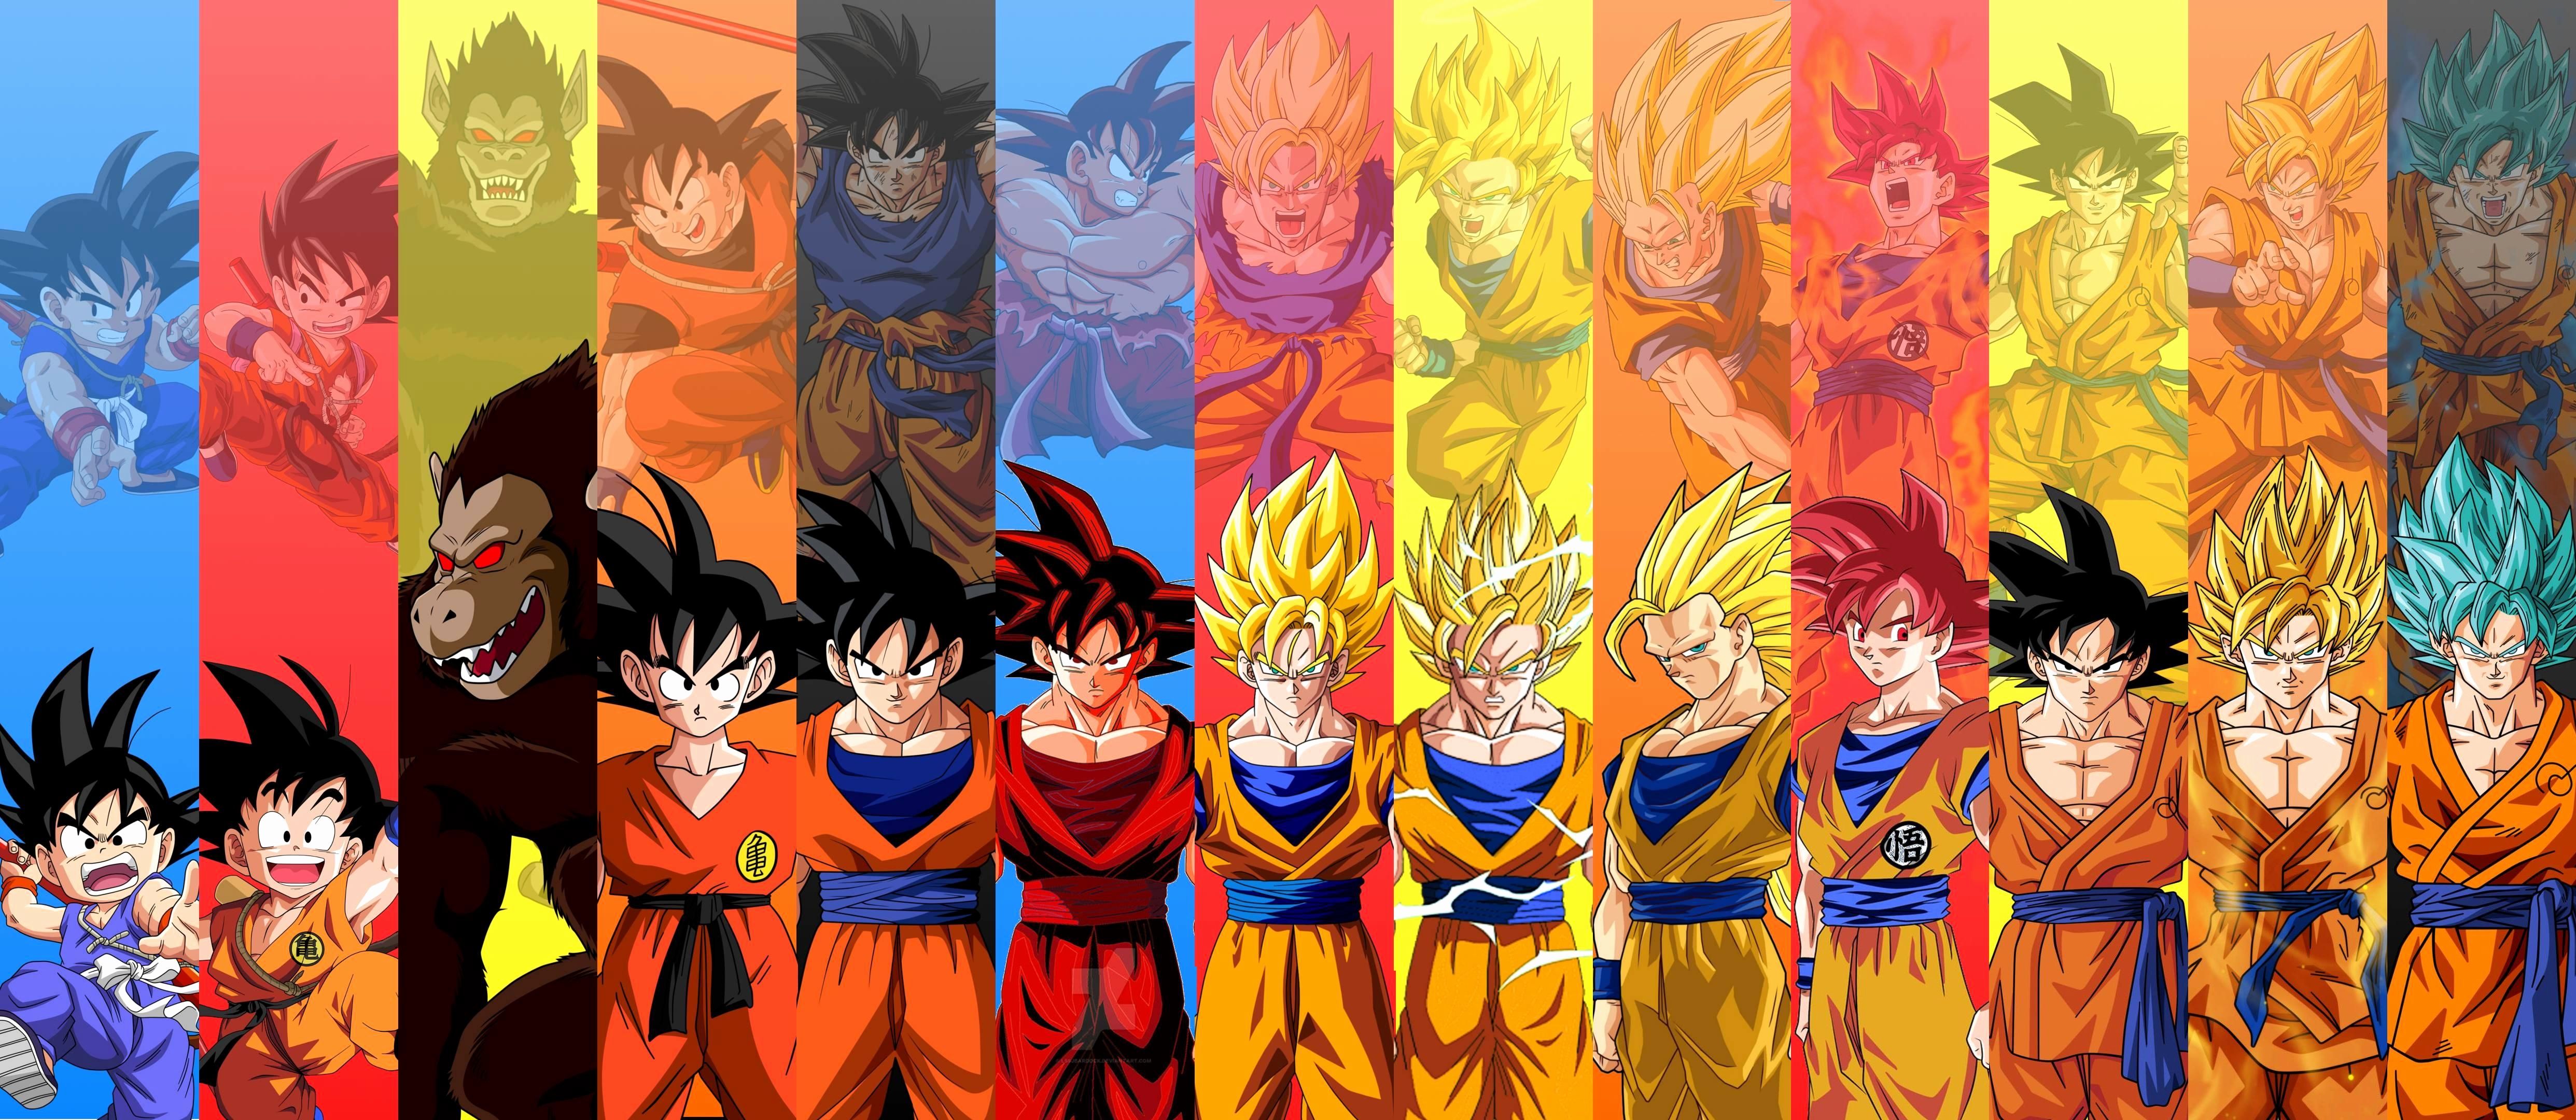 Super Saiya Wallpaper Inspirational Super Saiyan Goku Family Wallpaper Best 2687 Wallpaper This Month of The Hudson